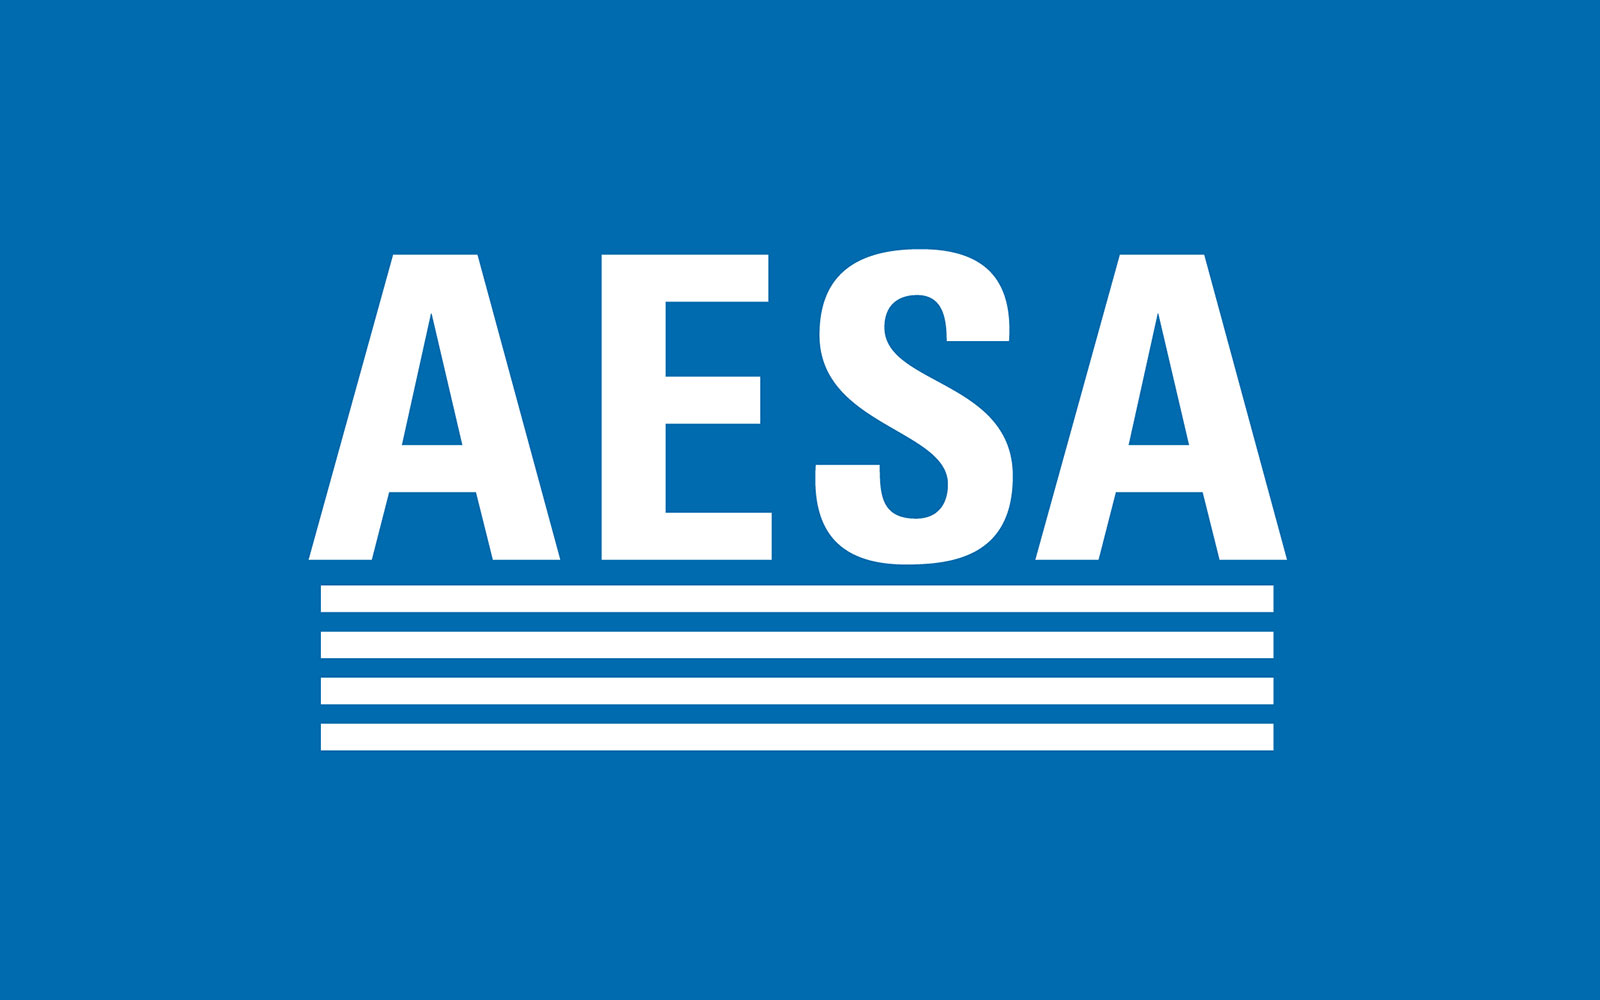 Logo AESA